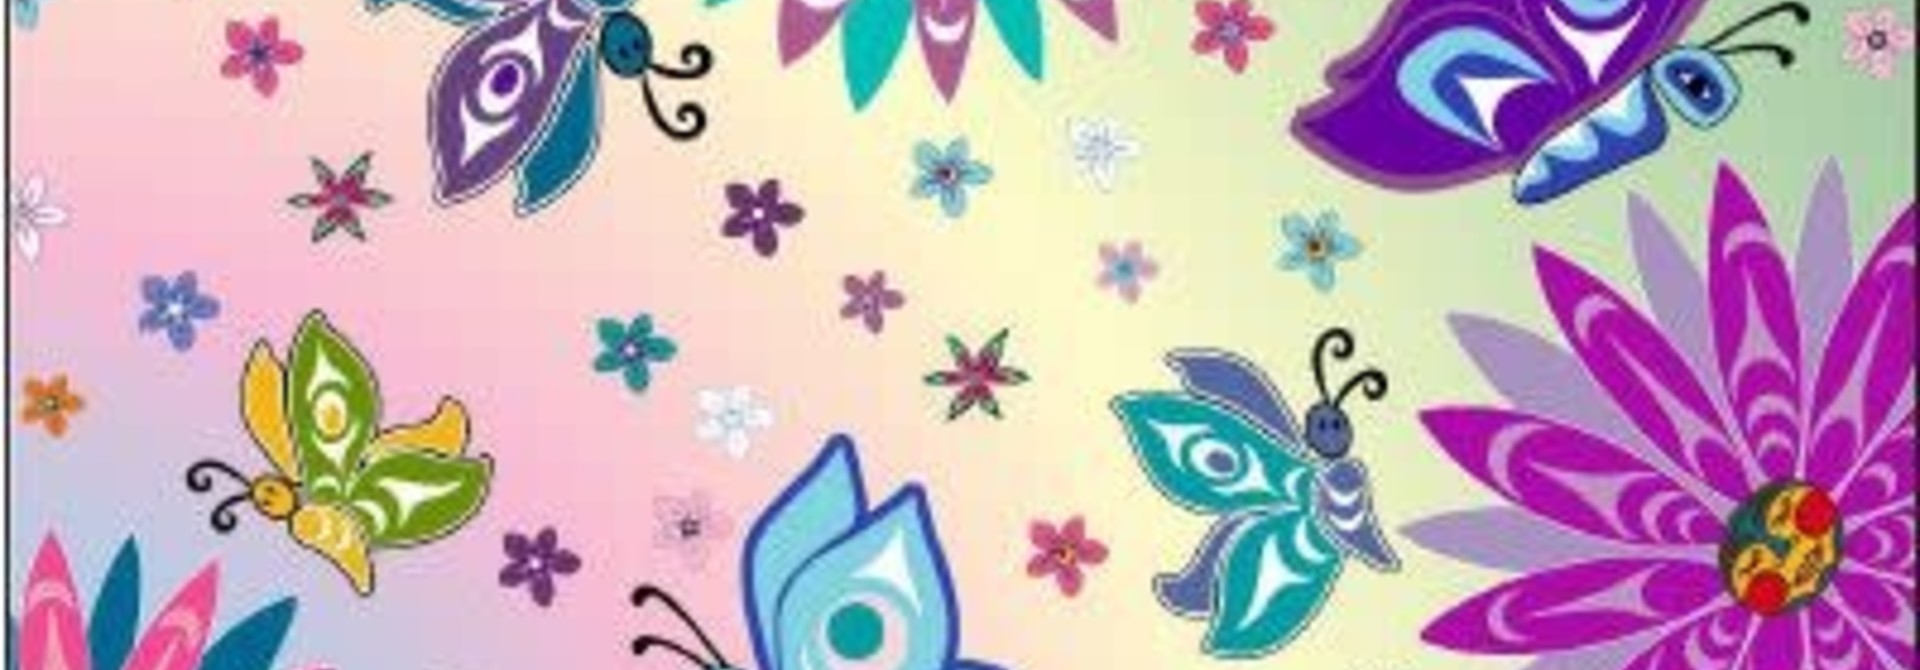 Baby Minky Blanket - Butterfly & Flowers by Angela Kimble